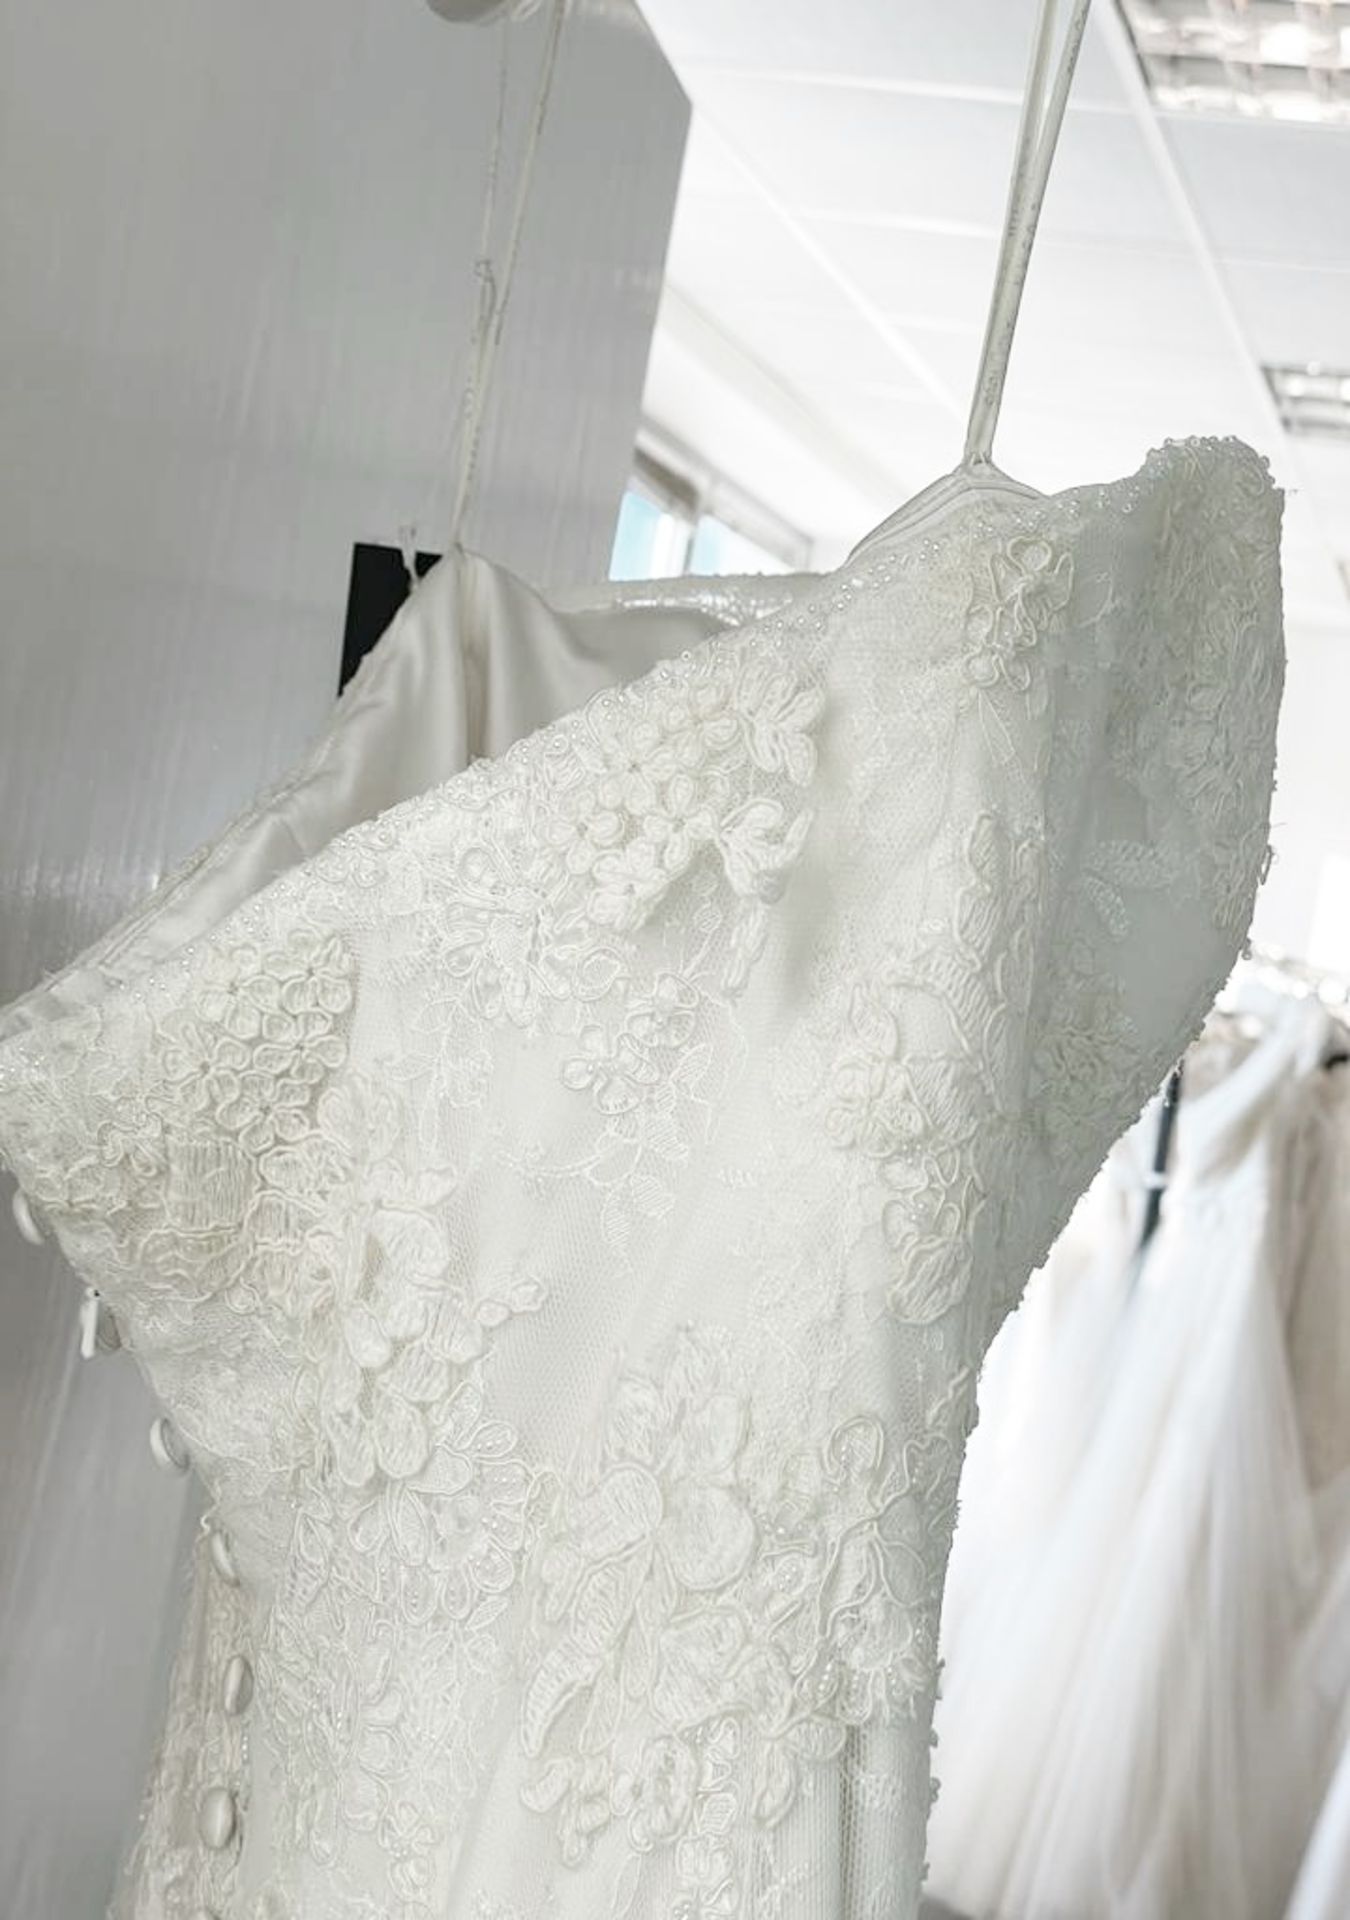 1 x LUSAN MANDONGUS 'Iona' Designer Wedding Dress Bridal Gown - Size: UK 12 - Original RRP £1,950 - Image 7 of 12